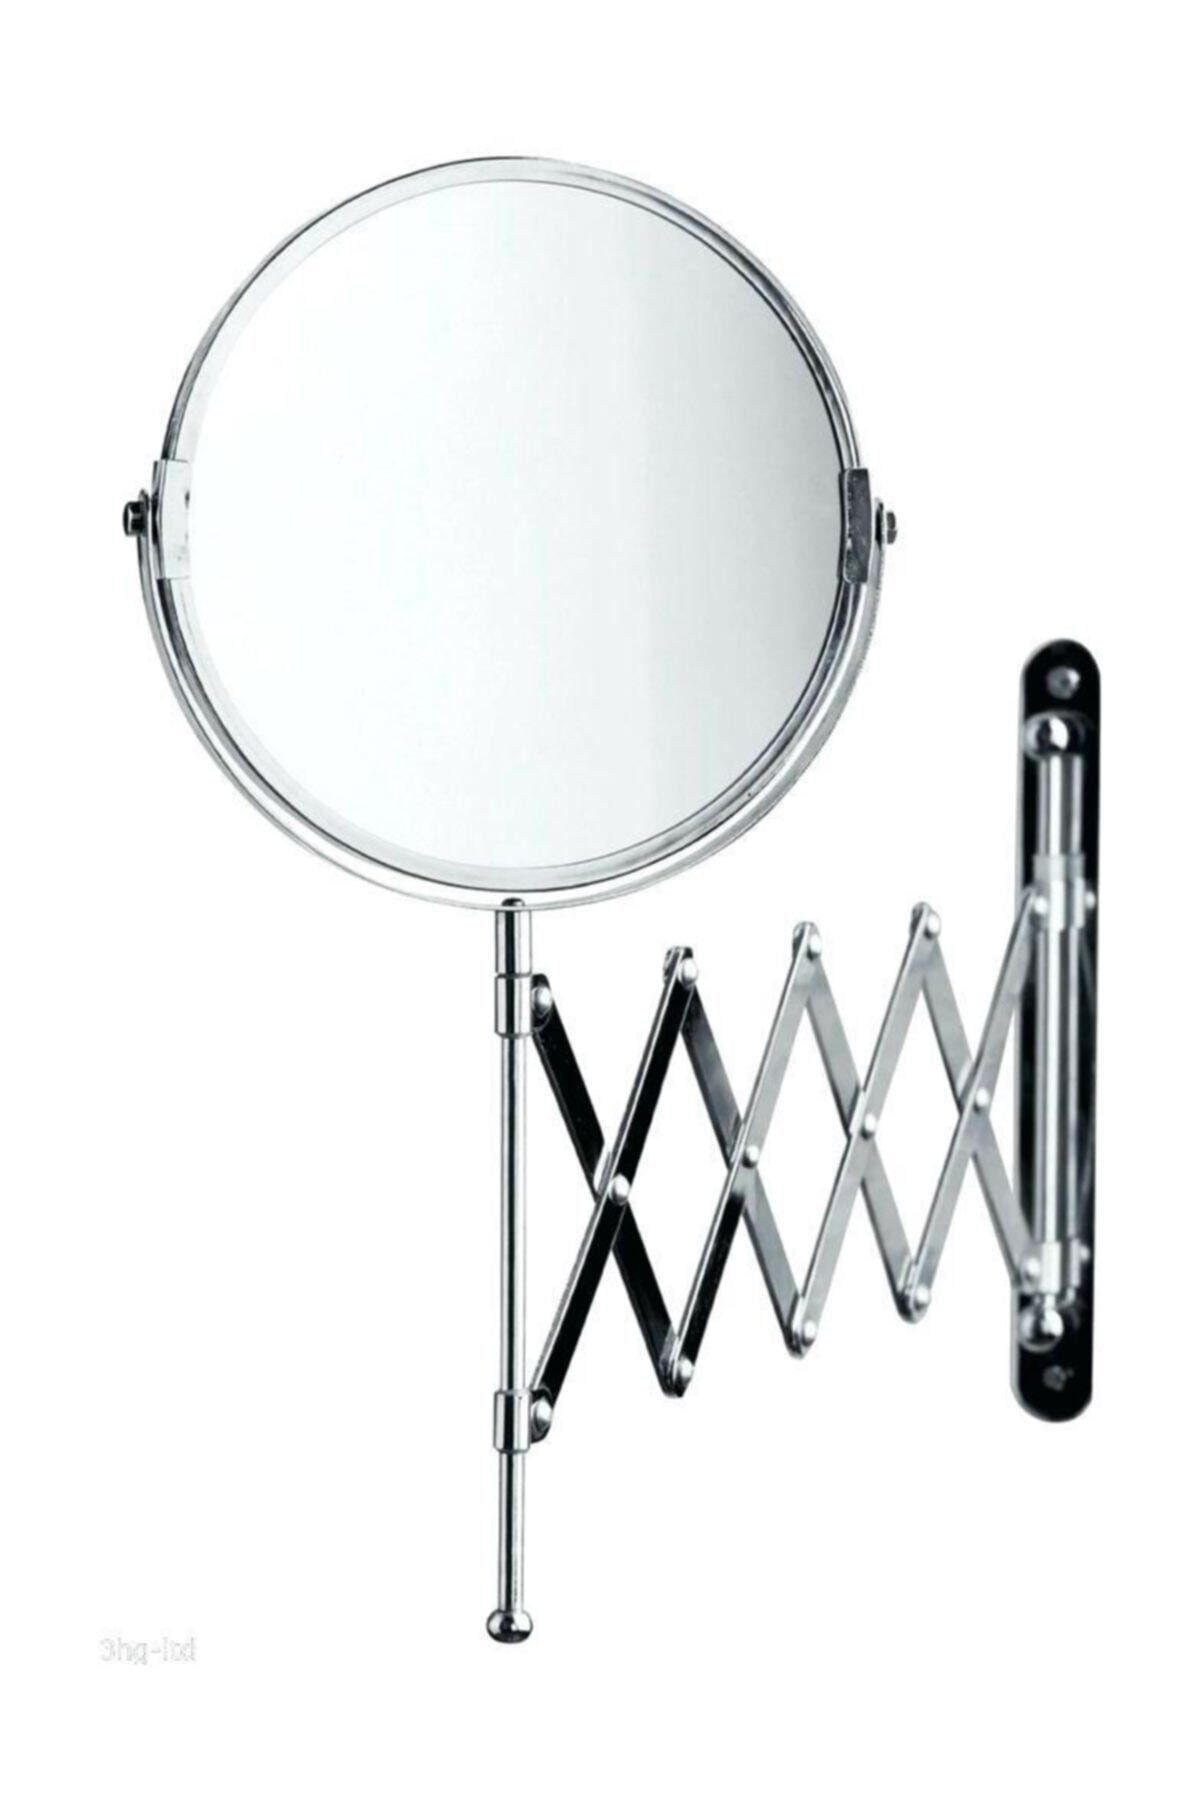 BARBUN Frack Büyüteçli Çift Taraflı Ayna Makyaj Tıraş Aynası